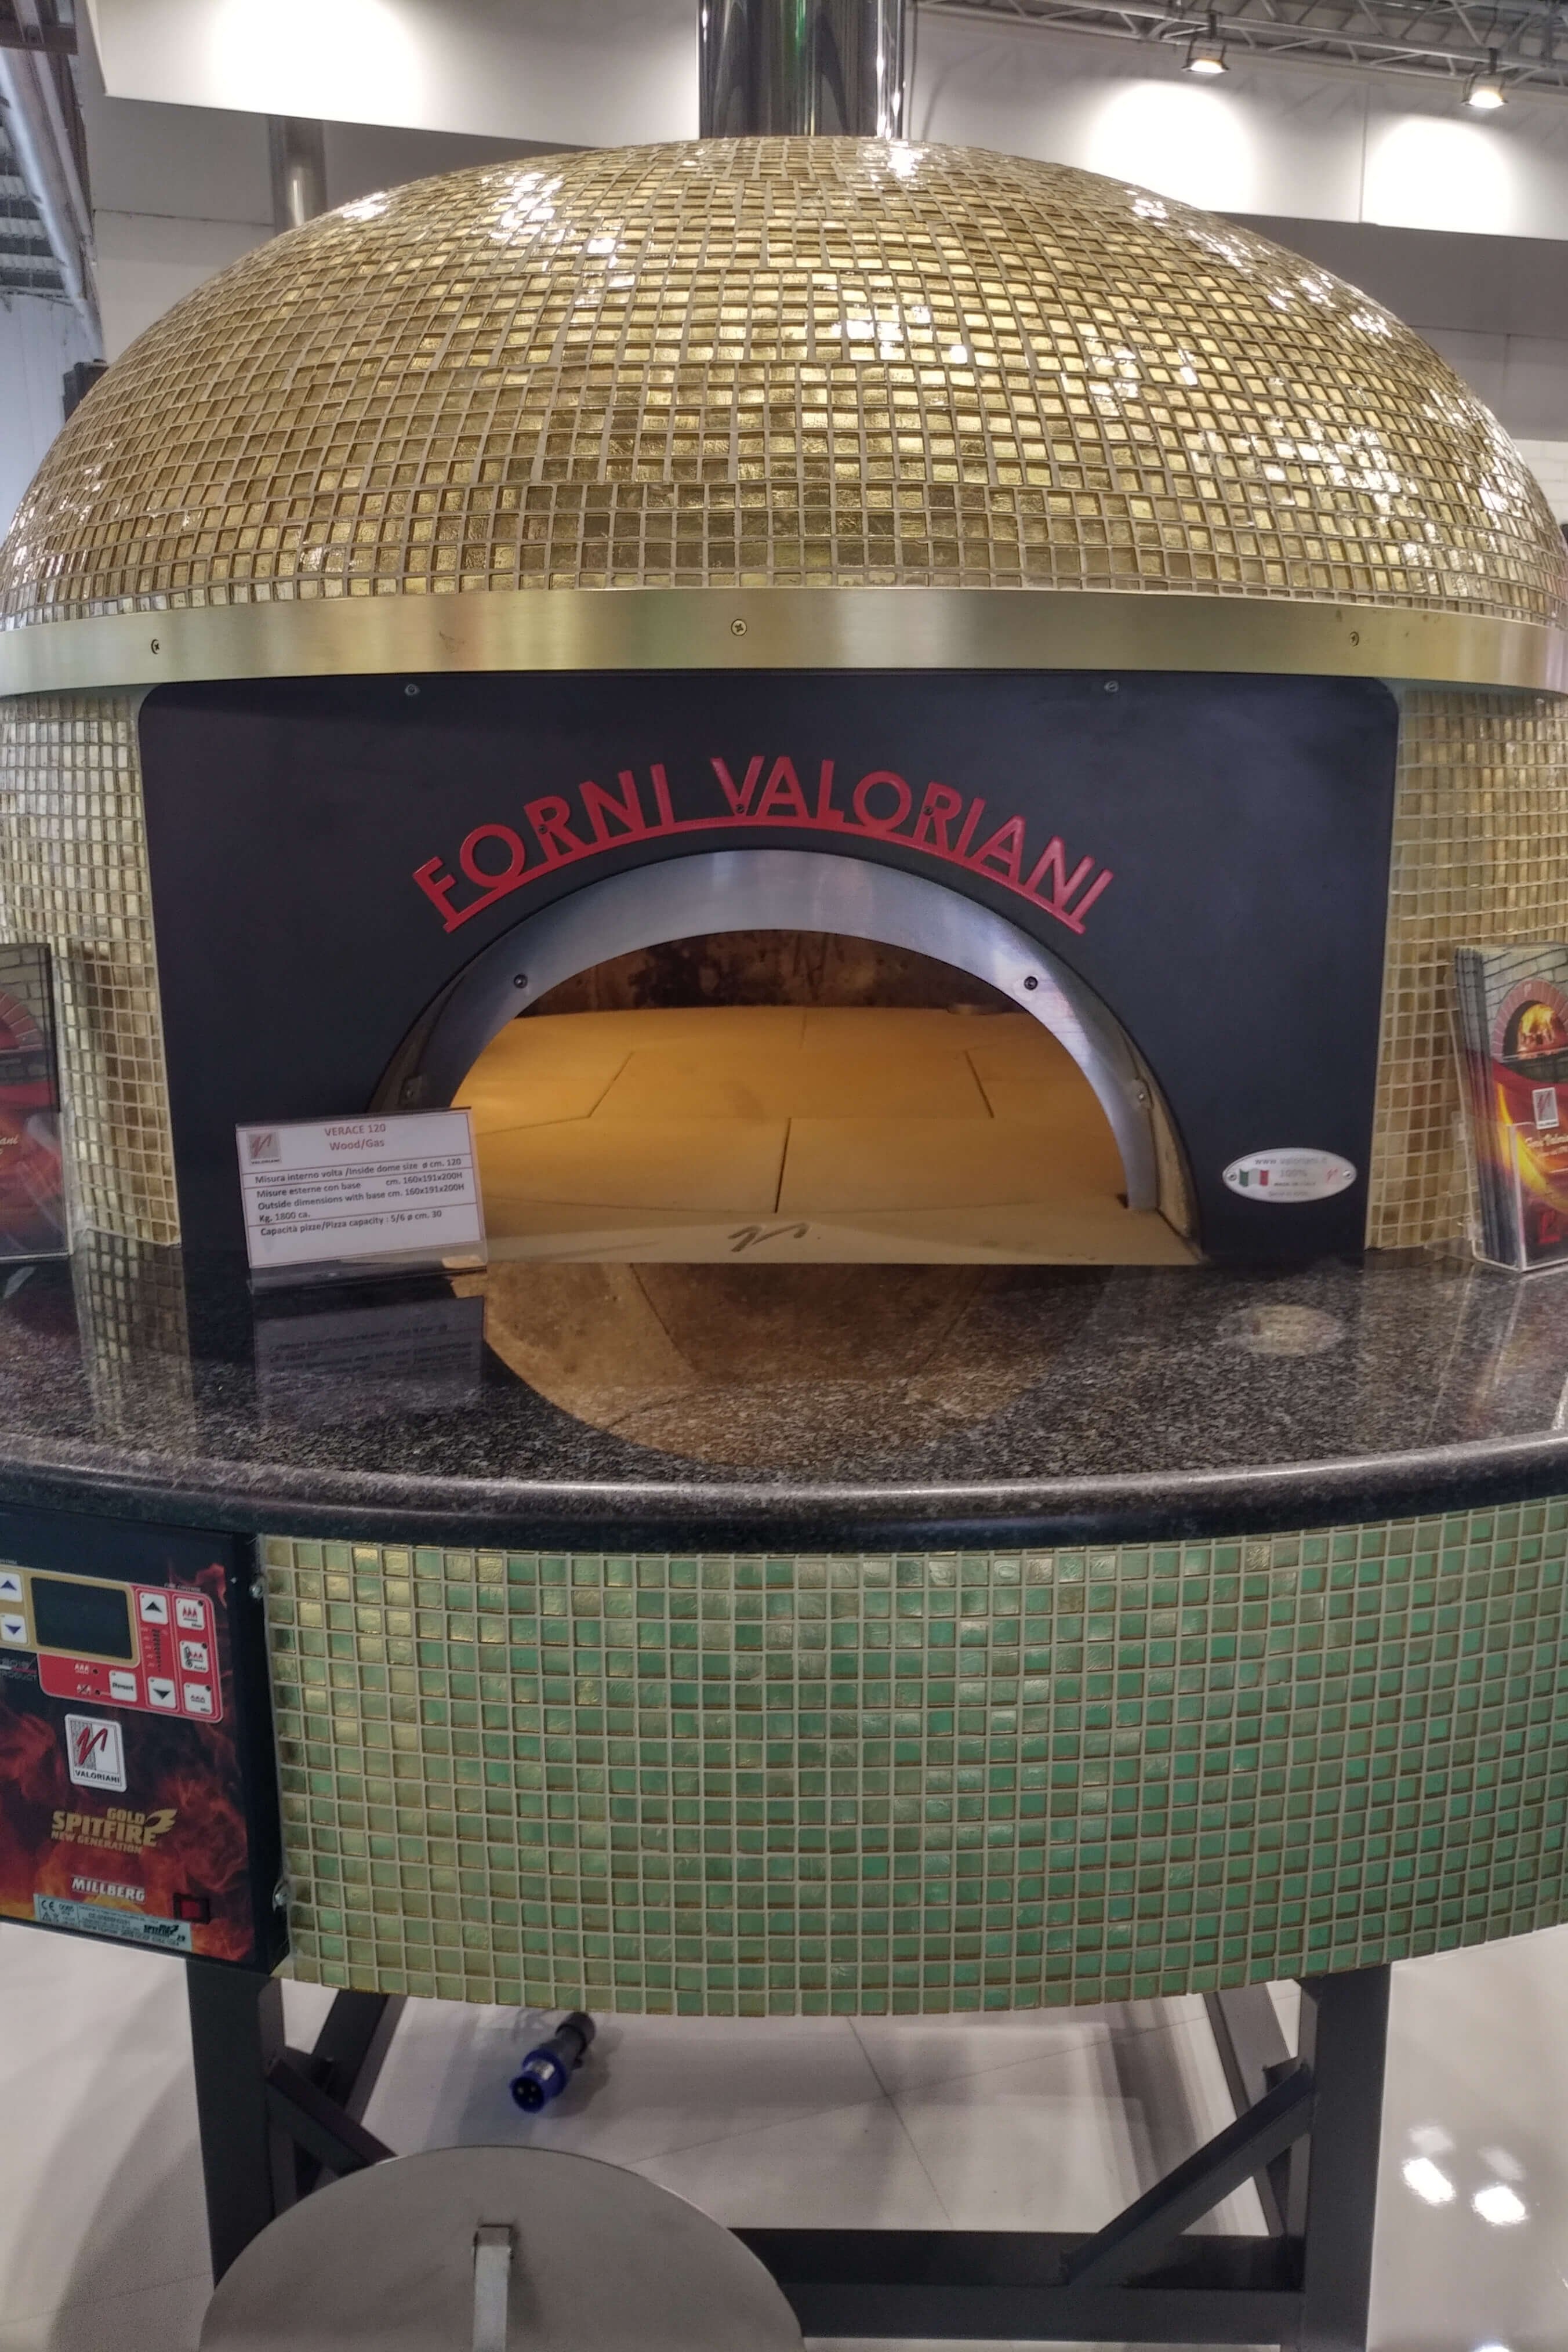 Holzpizzaofen Valoriani Verace Napoletano: Gastro-Pizzaofen mit AVPN-Zertifikat, 120 cm Durchmesser